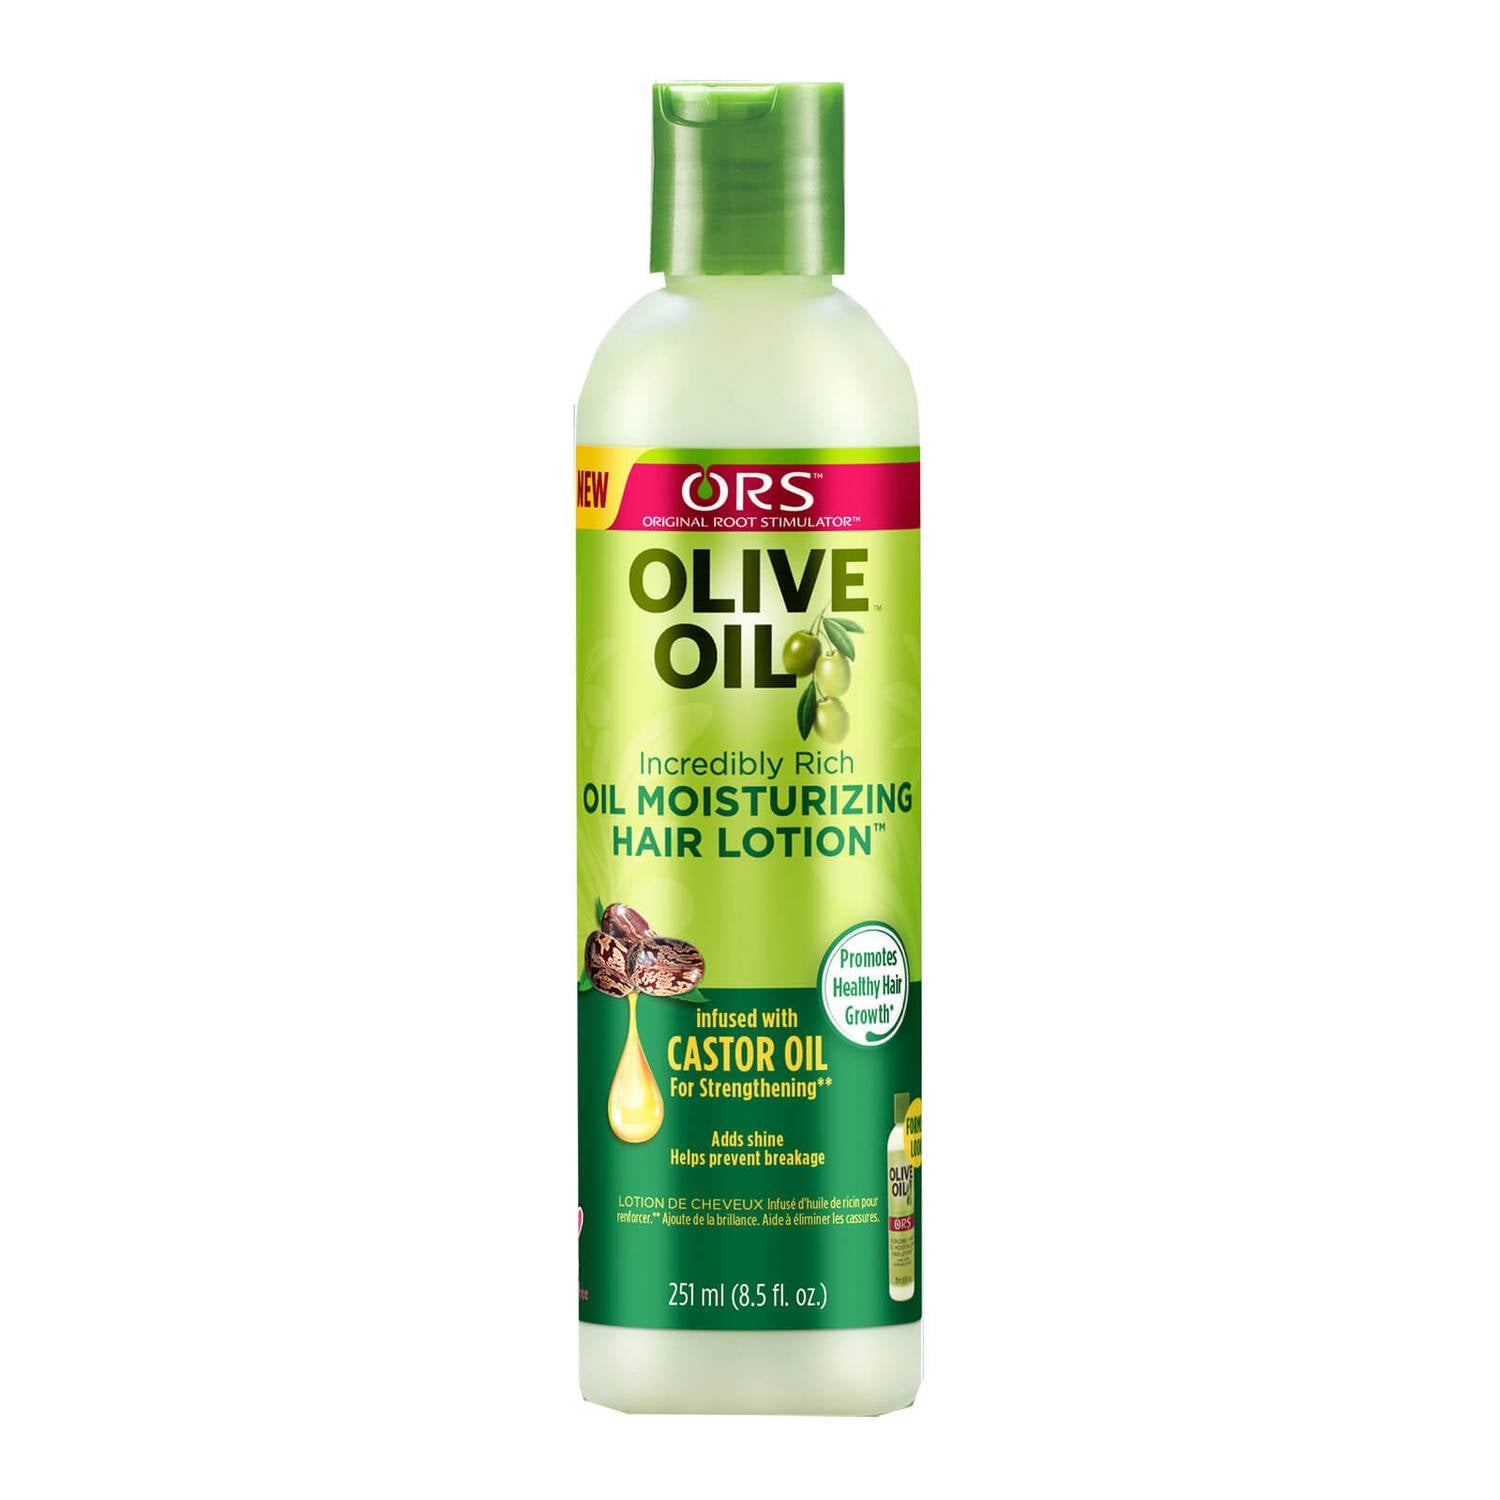 ORS Olive Oil Moisturizing Hair Lotion